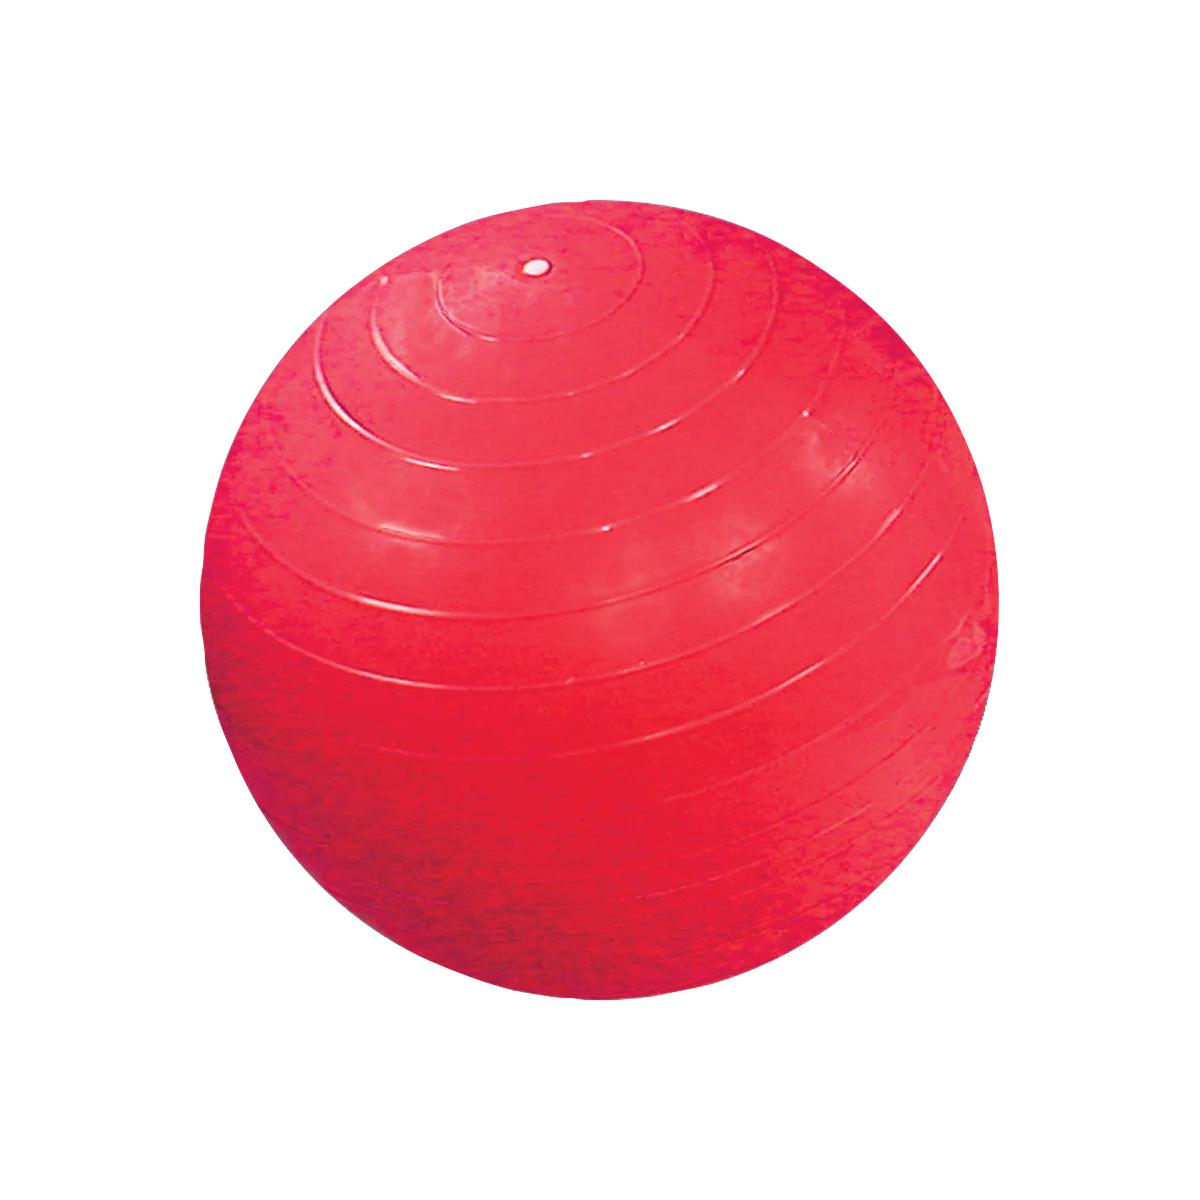 yoga ball red - Cómo guardar una pelota de pilates